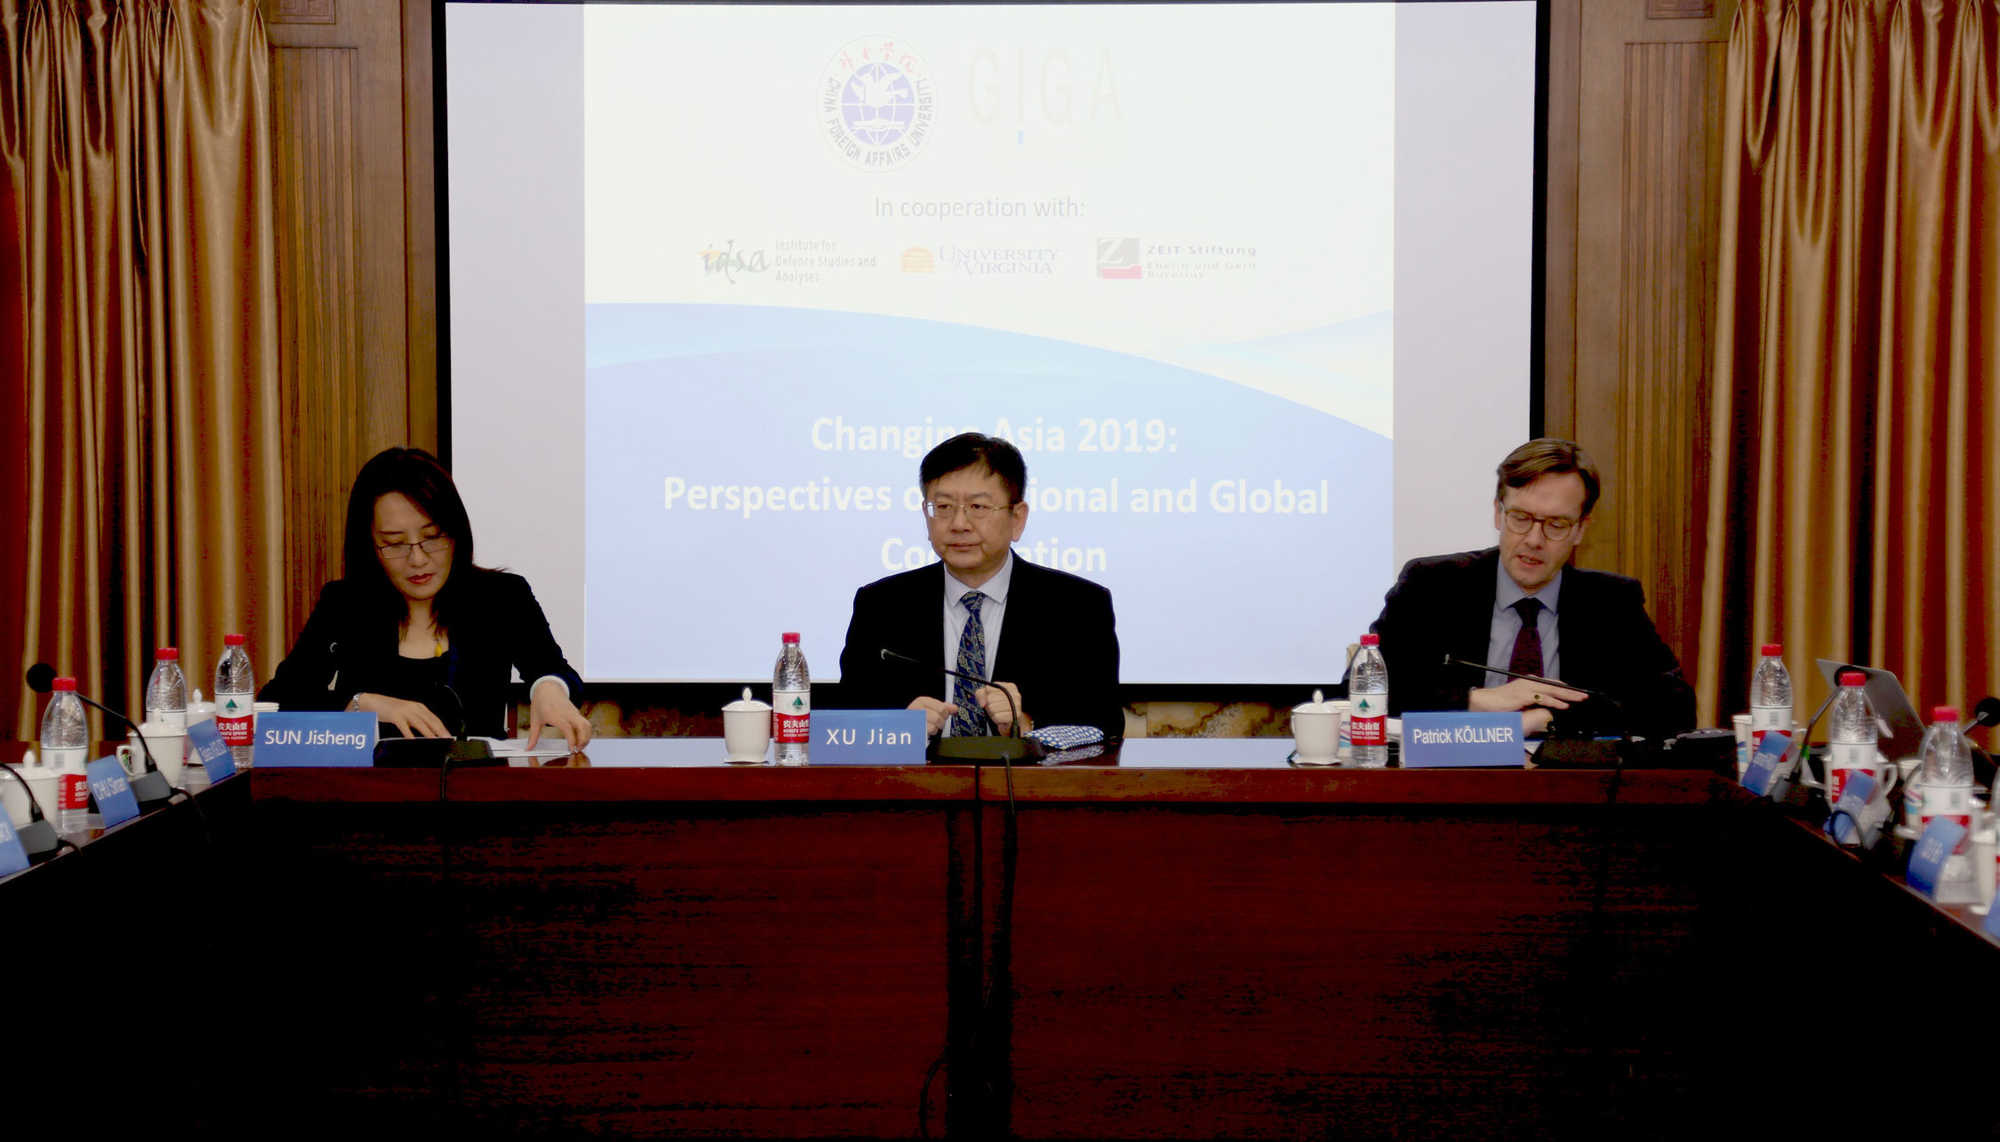 From left to right: Sun Jisheng, XU Jian, Patrick Köllner